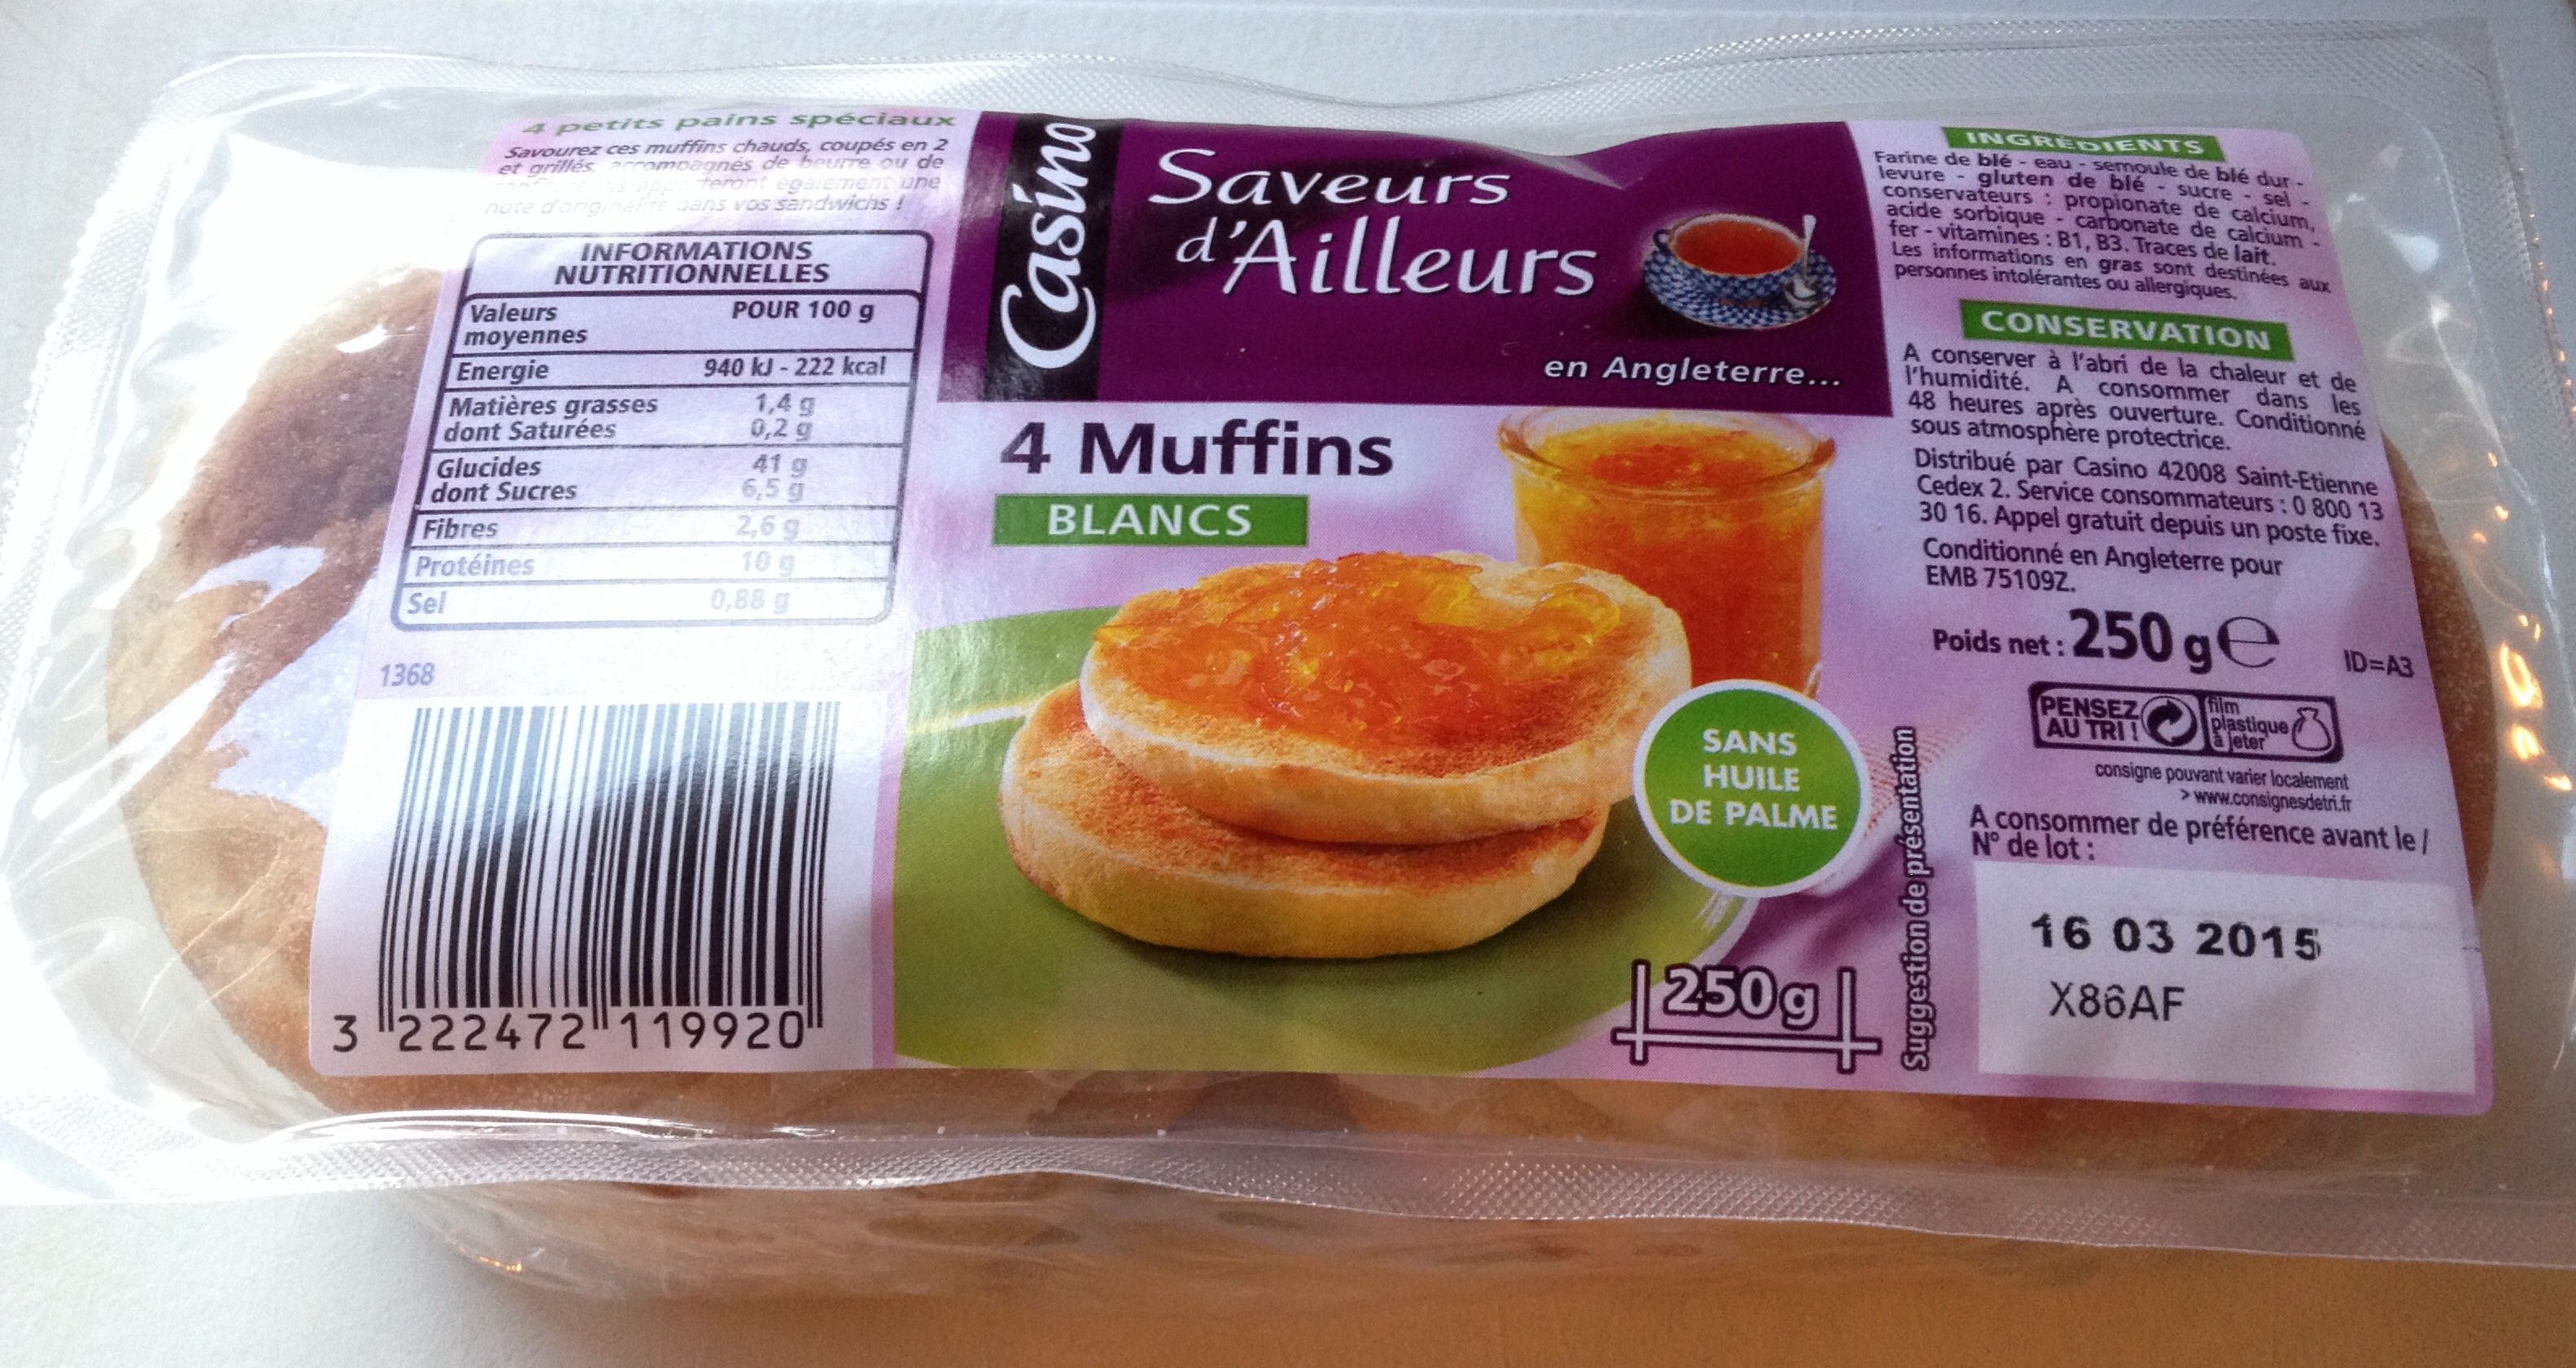 4 Muffins blancs - CASINO SAVEURS D'AILLEURS - Royaume-Uni - Product - fr